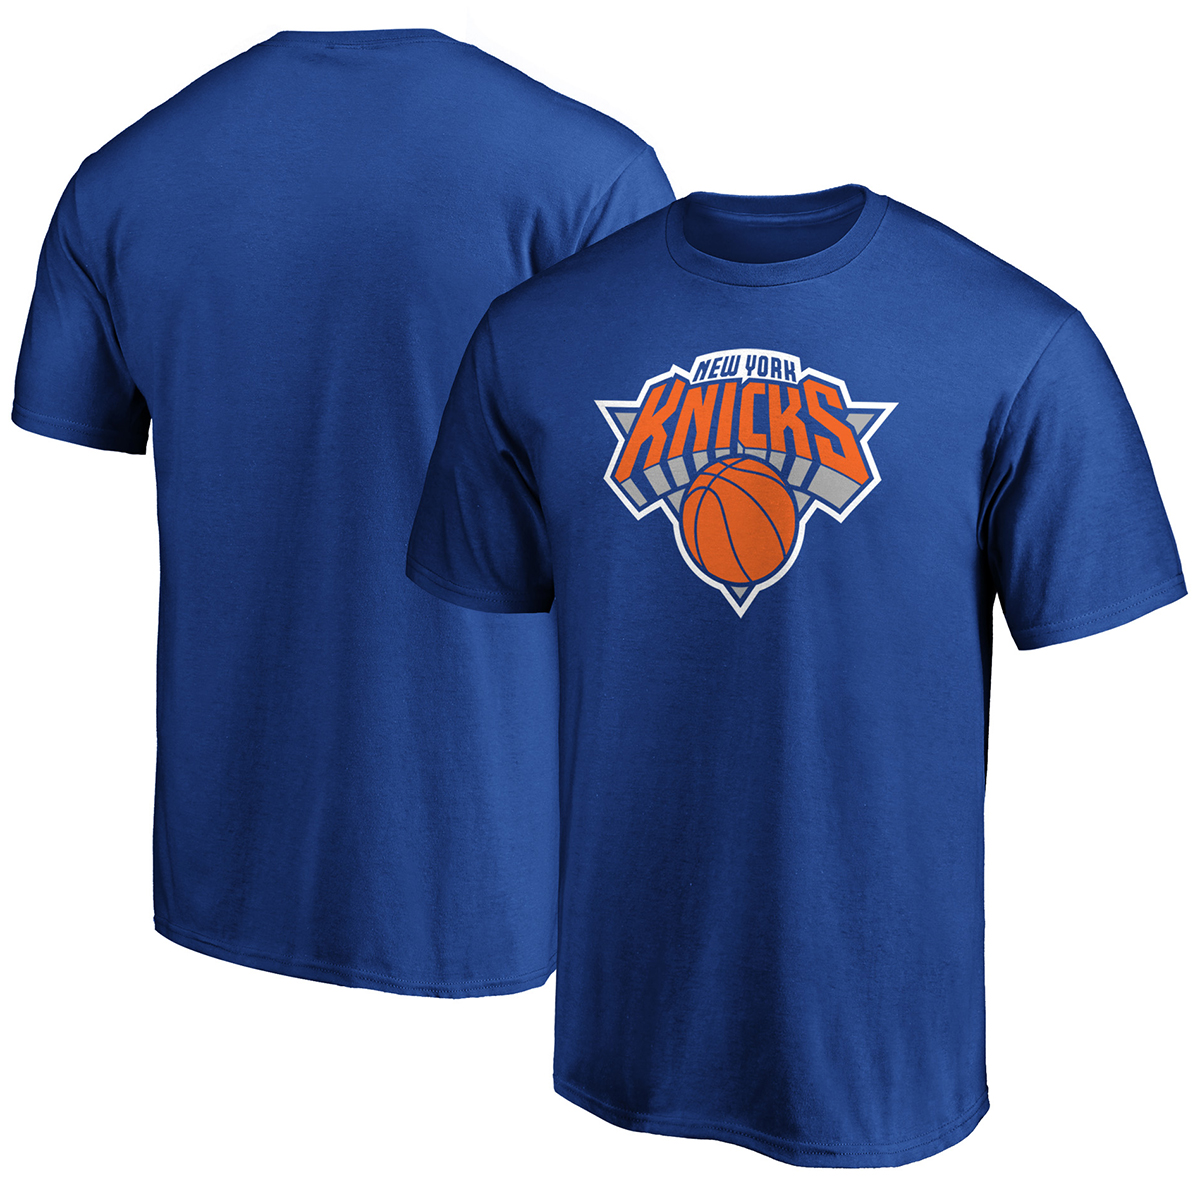 New York Knicks Men's Primary Logo Short-Sleeve Tee